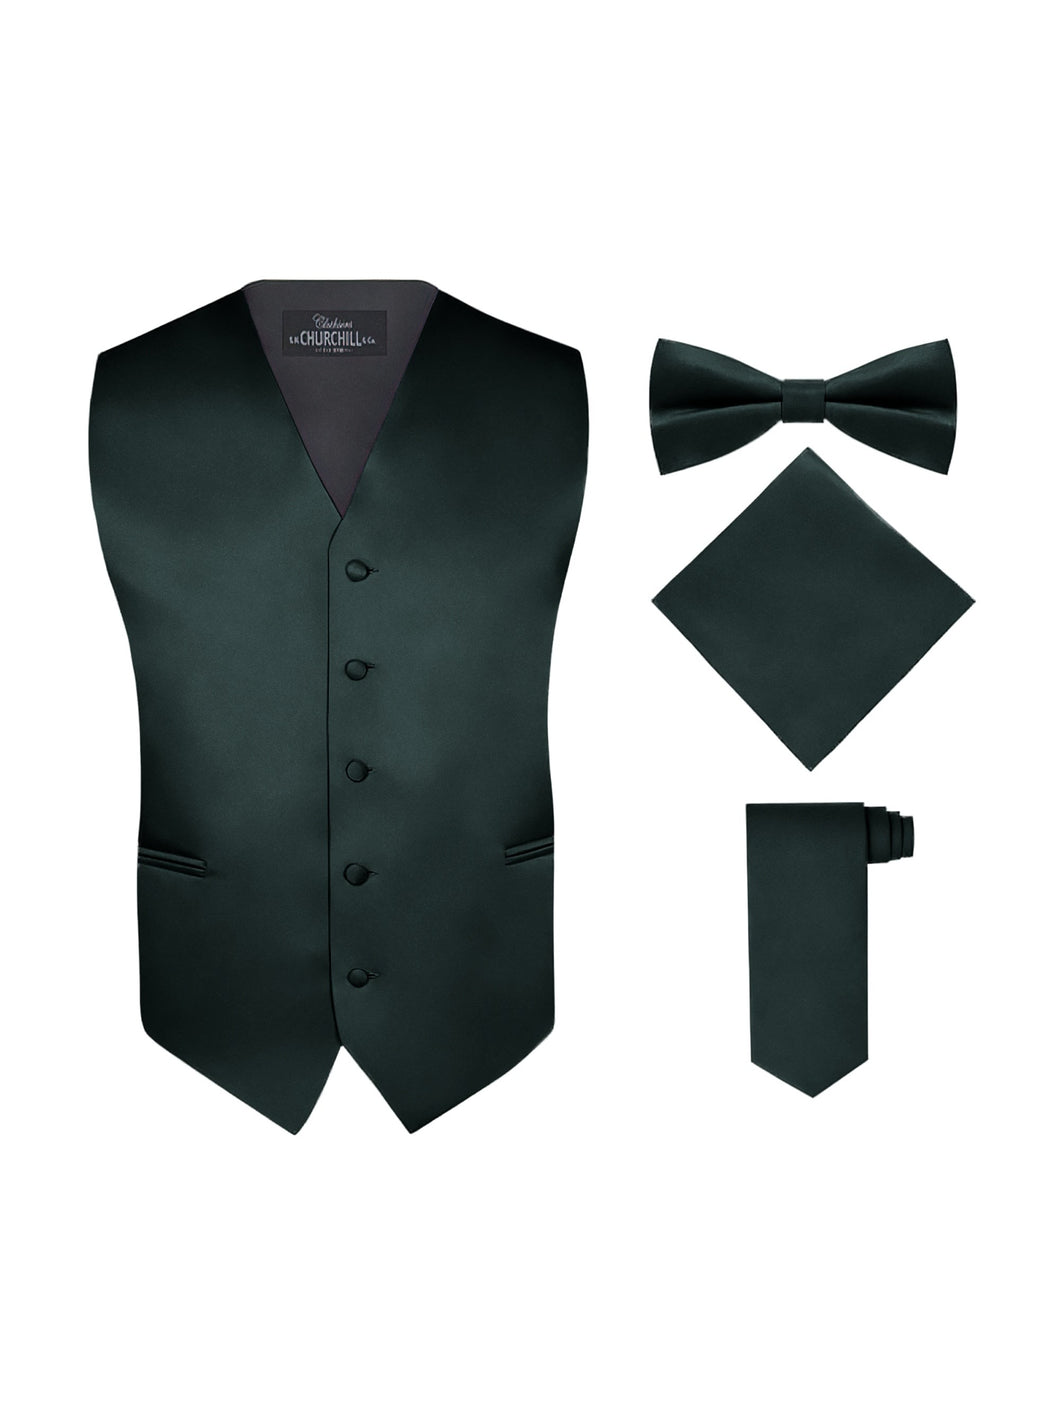 S.H. Churchill & Co. Men's 4 Piece Hunter Green Vest Set, with Bow Tie, Neck Tie & Pocket Hankie